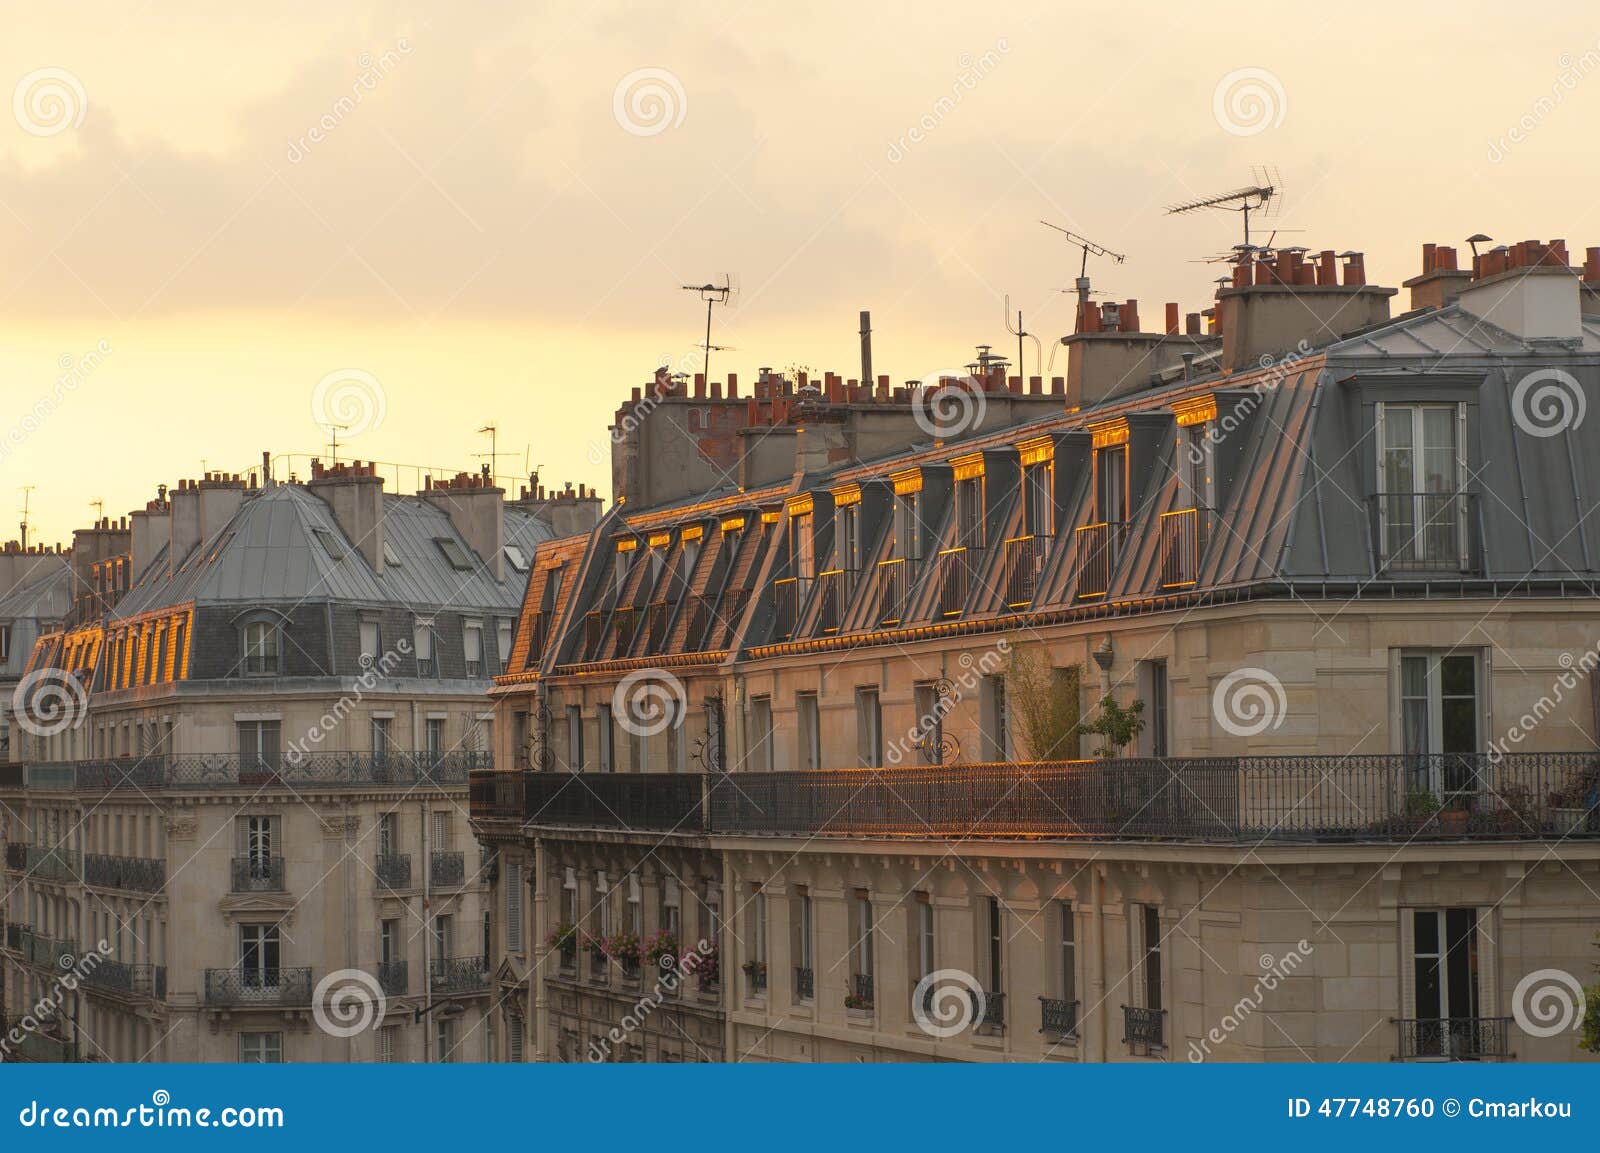 parisian roofs